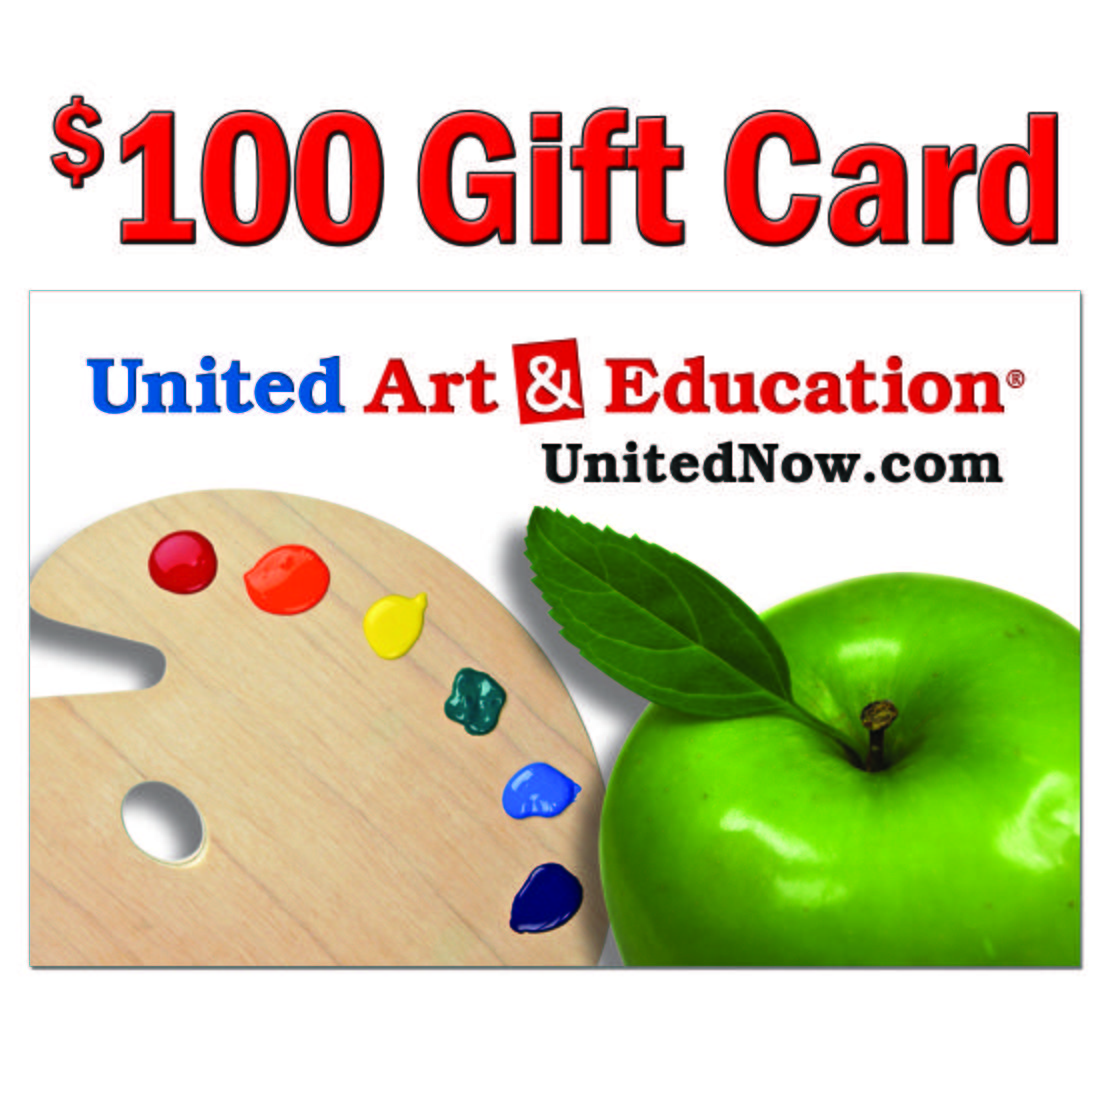 United Art & Education Gift Card for Unitednow